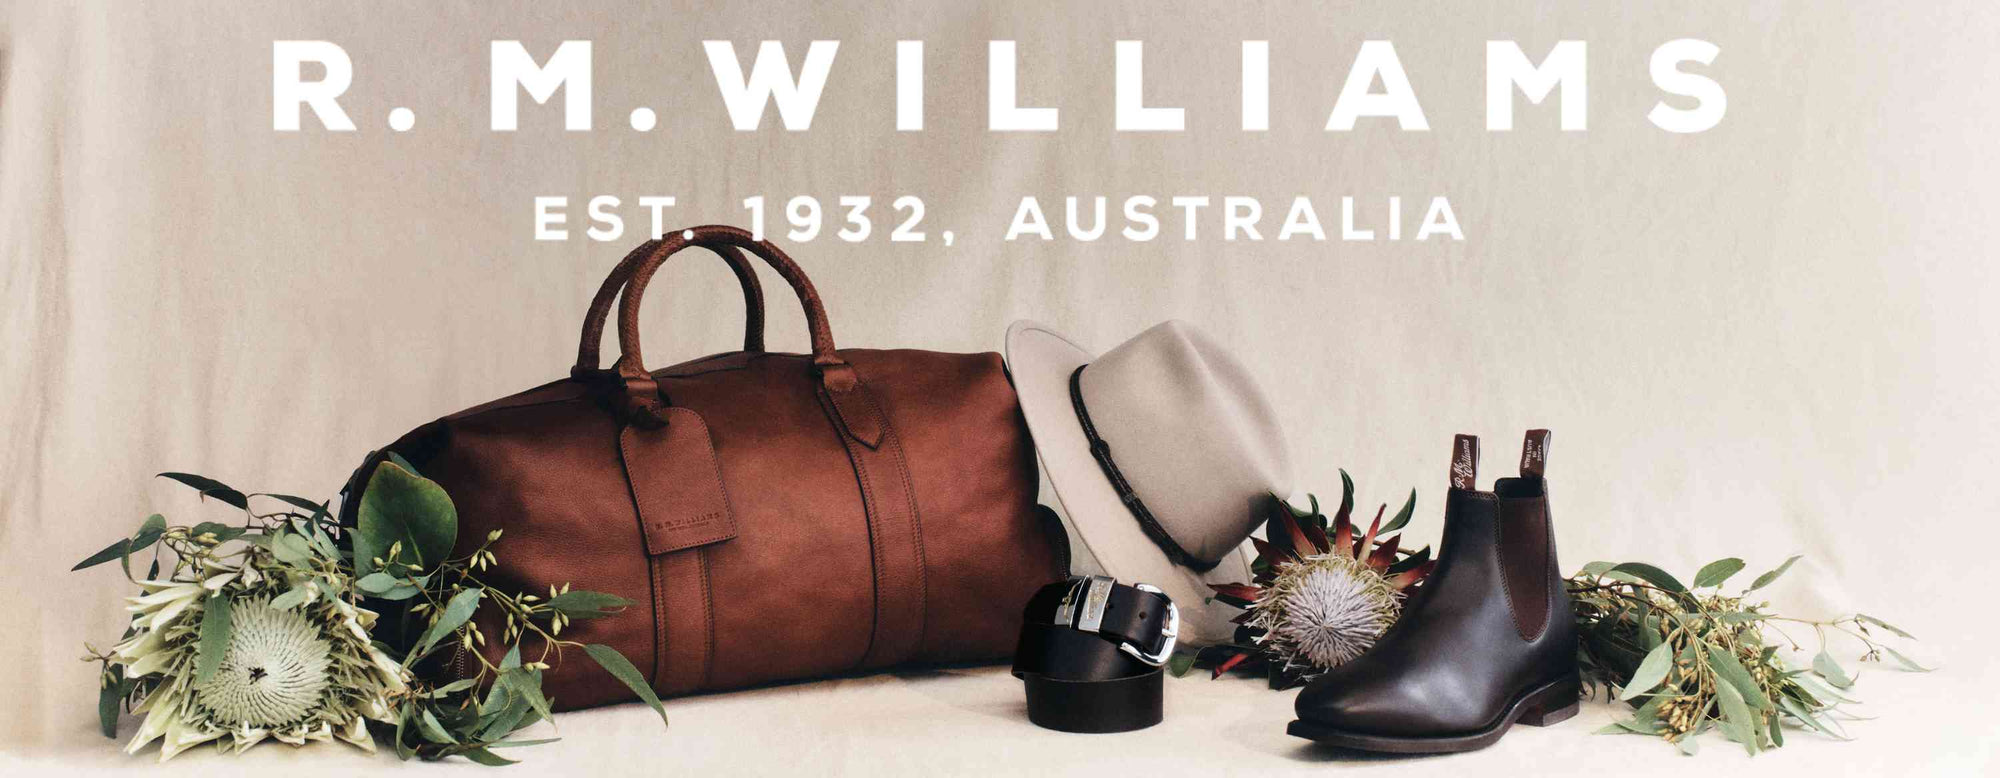 R.M.Williams Est. 1932, Australia. Leather duffle bag, Akubra hat, belt, boots & flowers pictured.